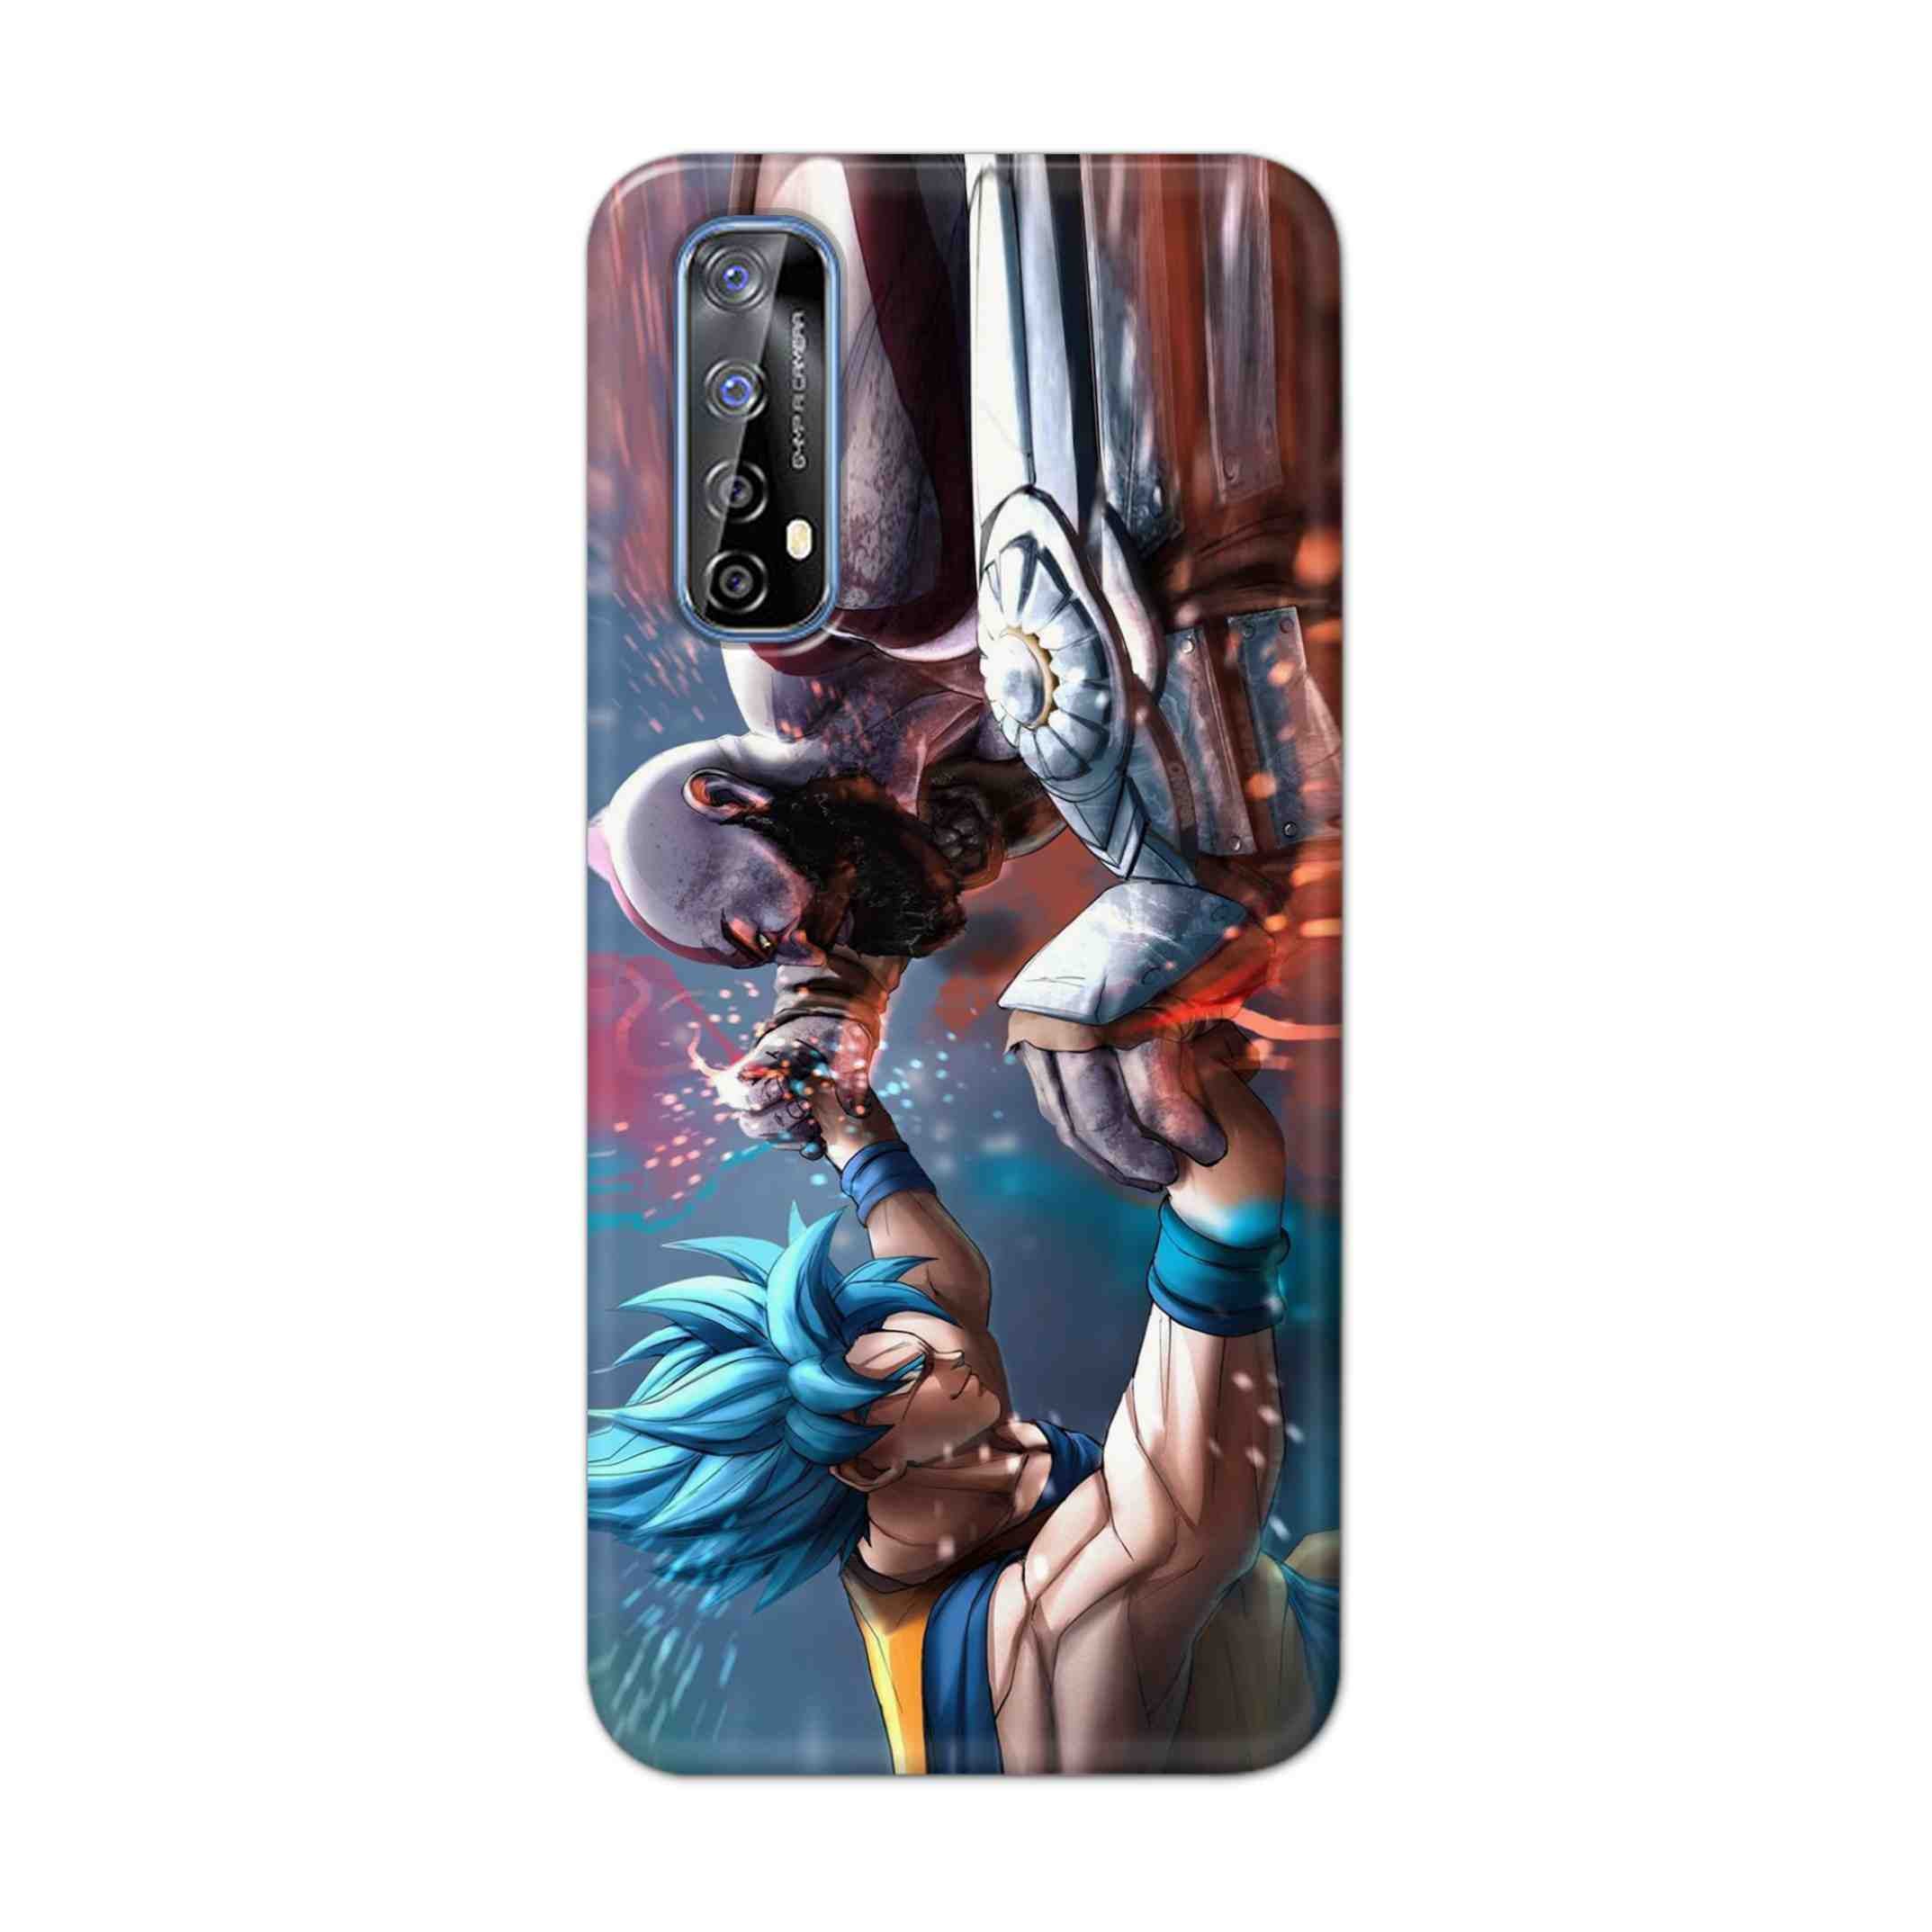 Buy Goku Vs Kratos Hard Back Mobile Phone Case Cover For Realme 7 Online